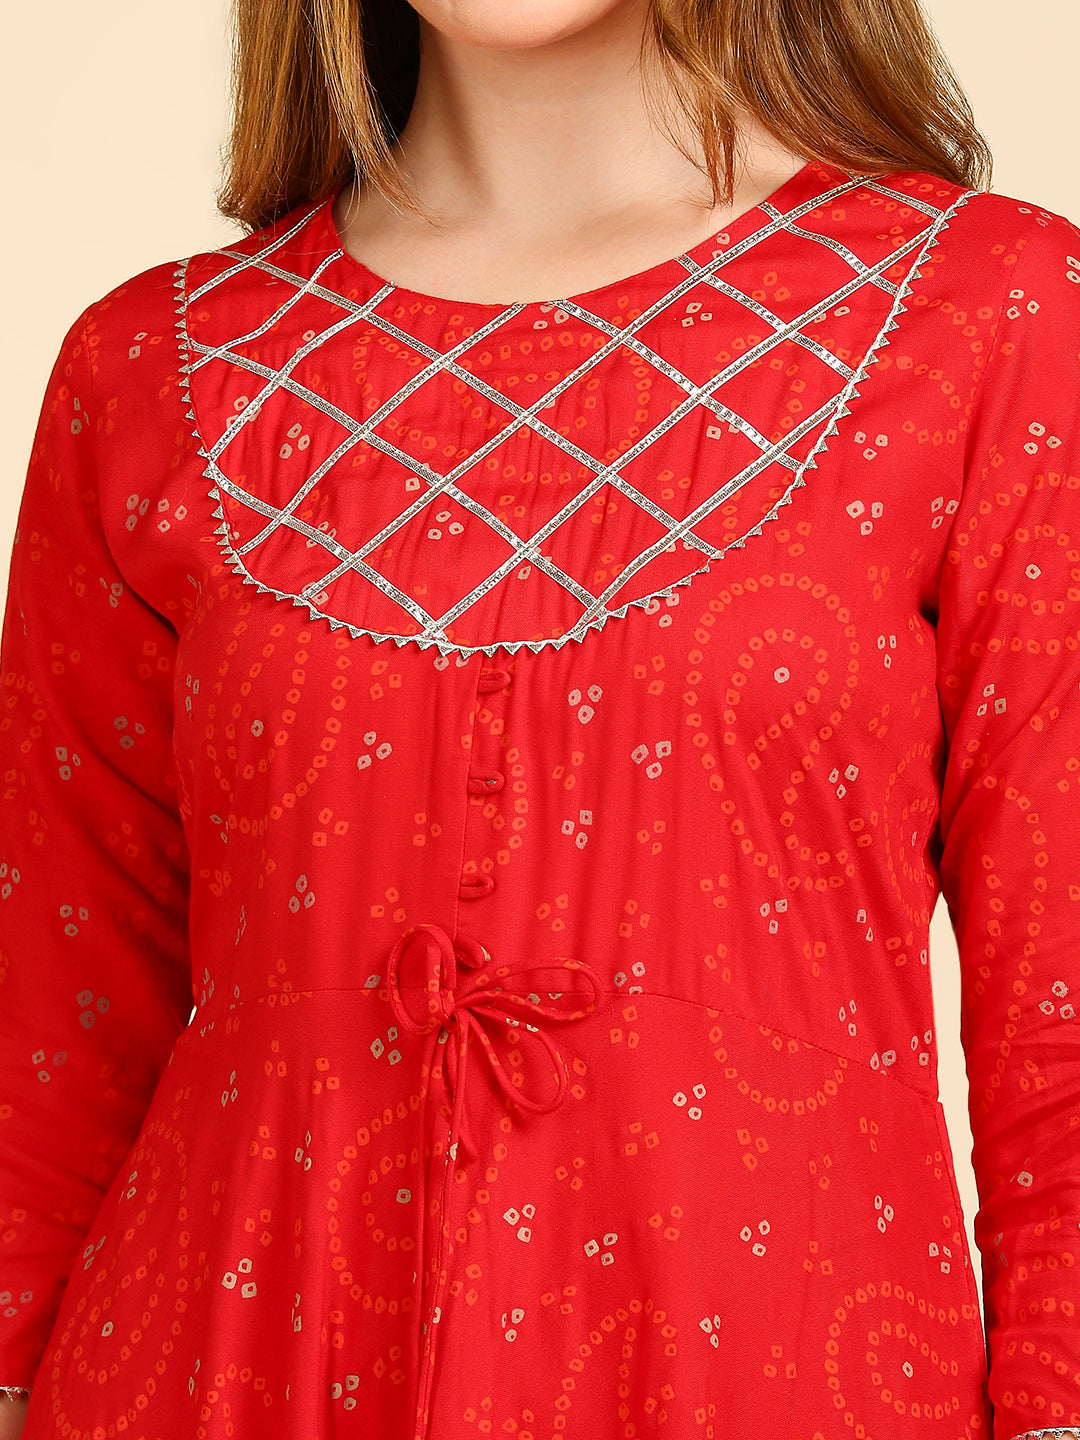 Women's's Red Ethnic Motifs Liva A-Line Midi Dress